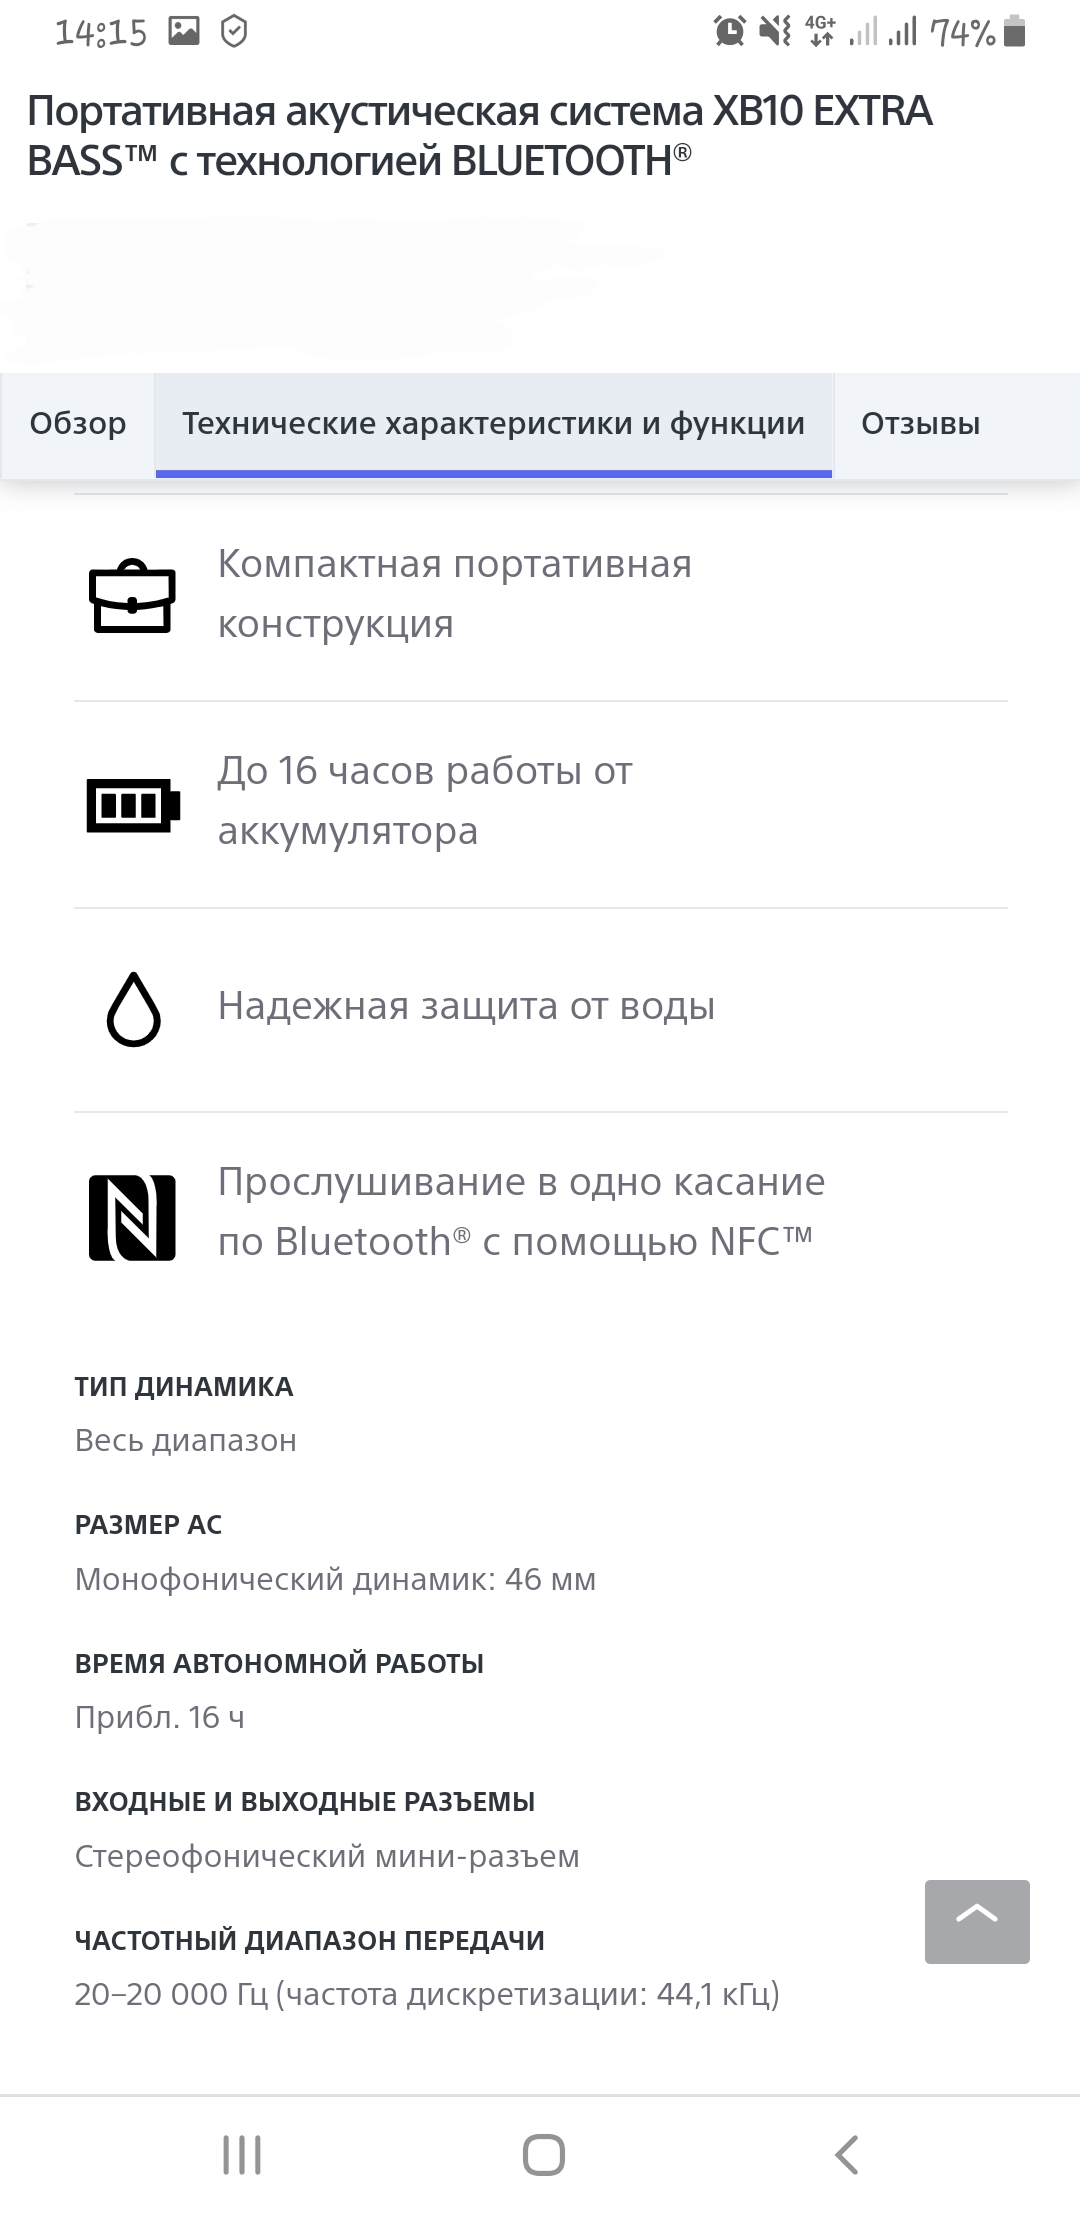 Саяногорск Инфо - screenshot_20210111-141611_chrome.jpg, Скачано: 105